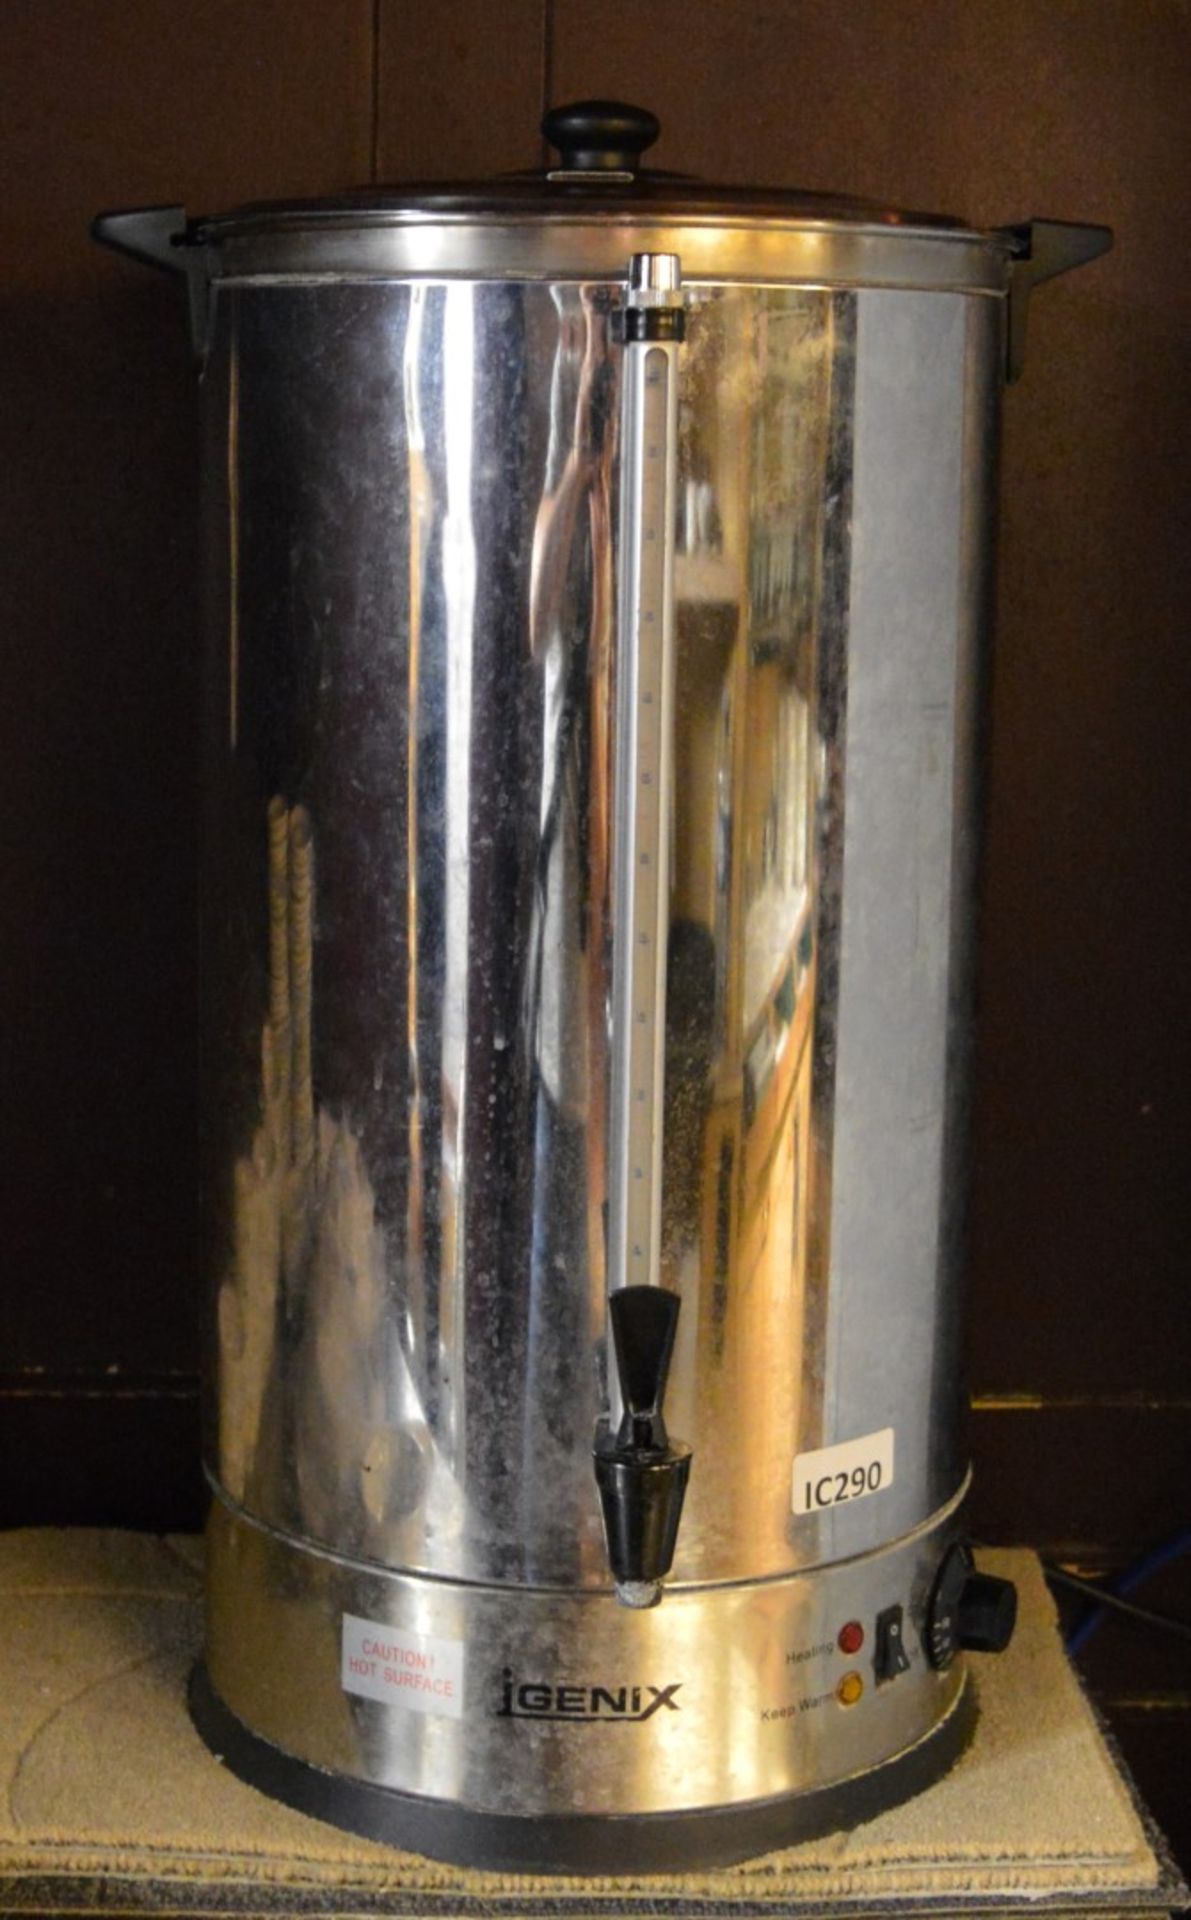 1 x Igenix 30 Litre Tea Urn & Hot Water Dispenser - 240v - CL180 - Ref IC290 - Location: London EC3V